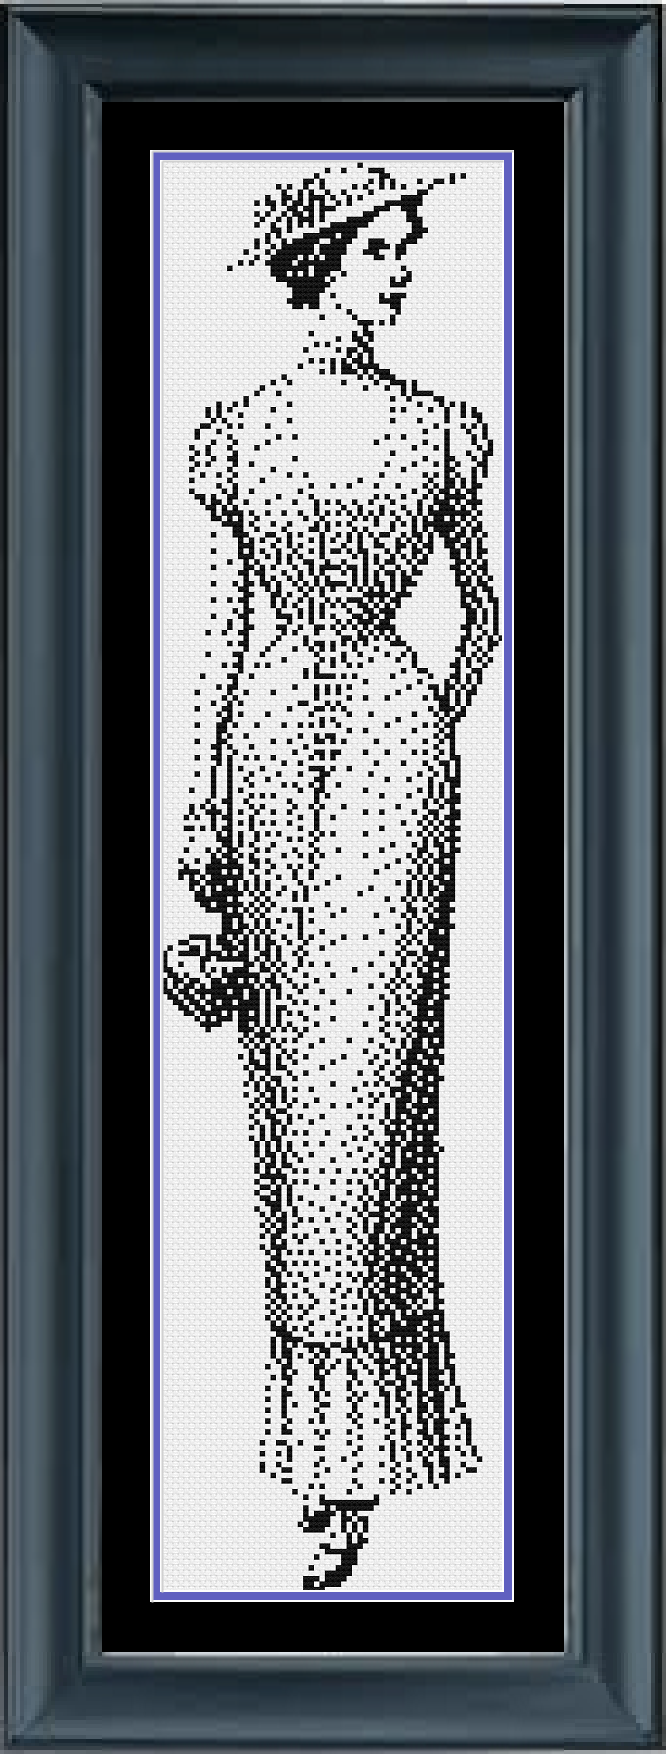 Vintage Fancy Lady Counted Cross Stitch Pattern | Blackwork Monochrome | Instant Download PDF